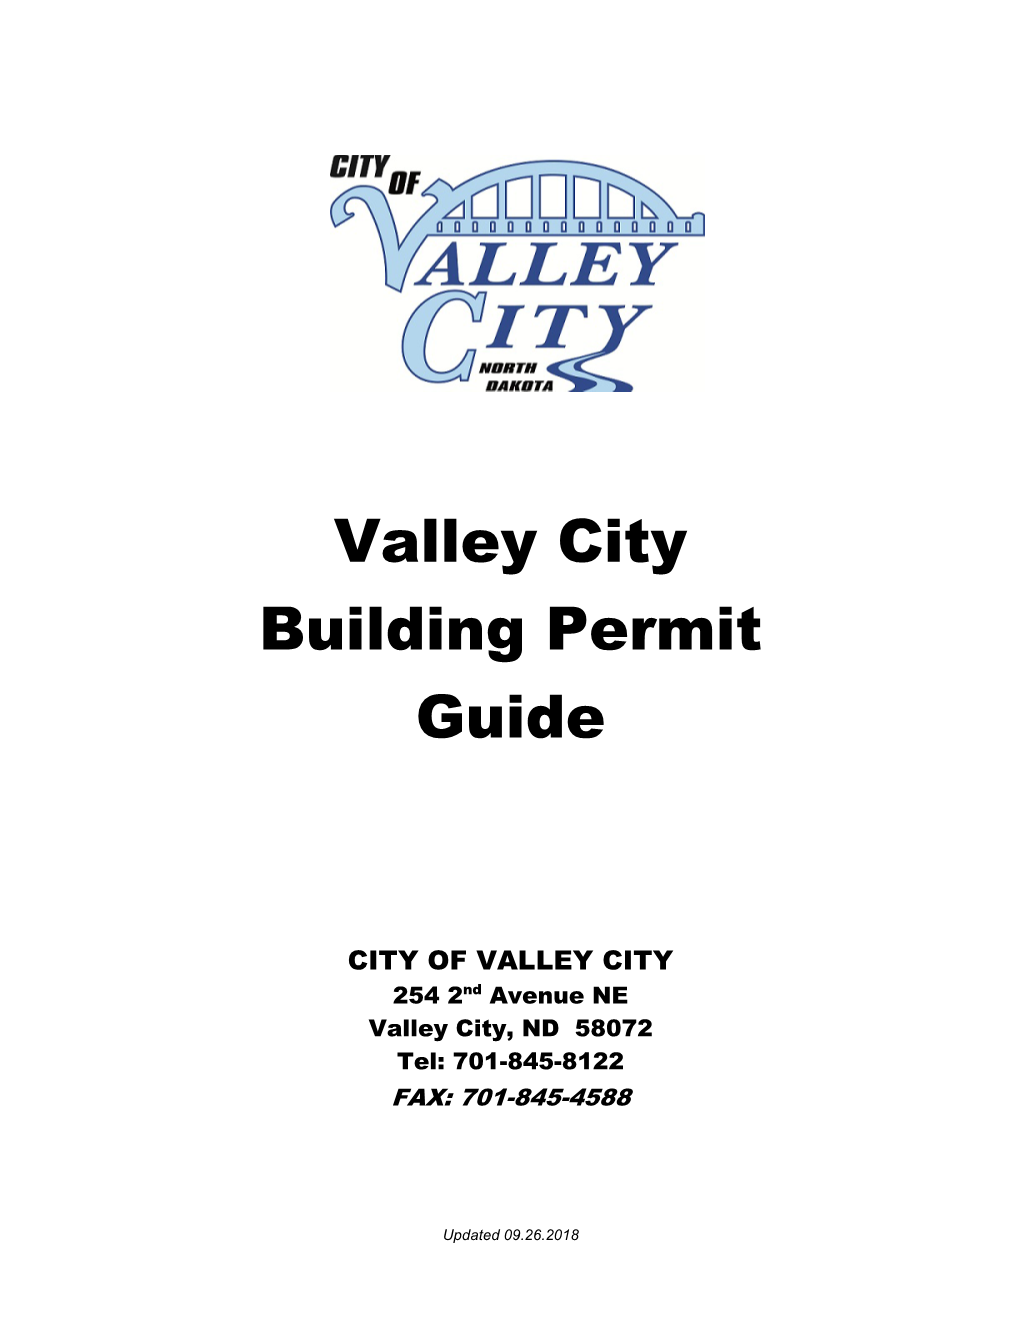 Valley City Building Permit Guide